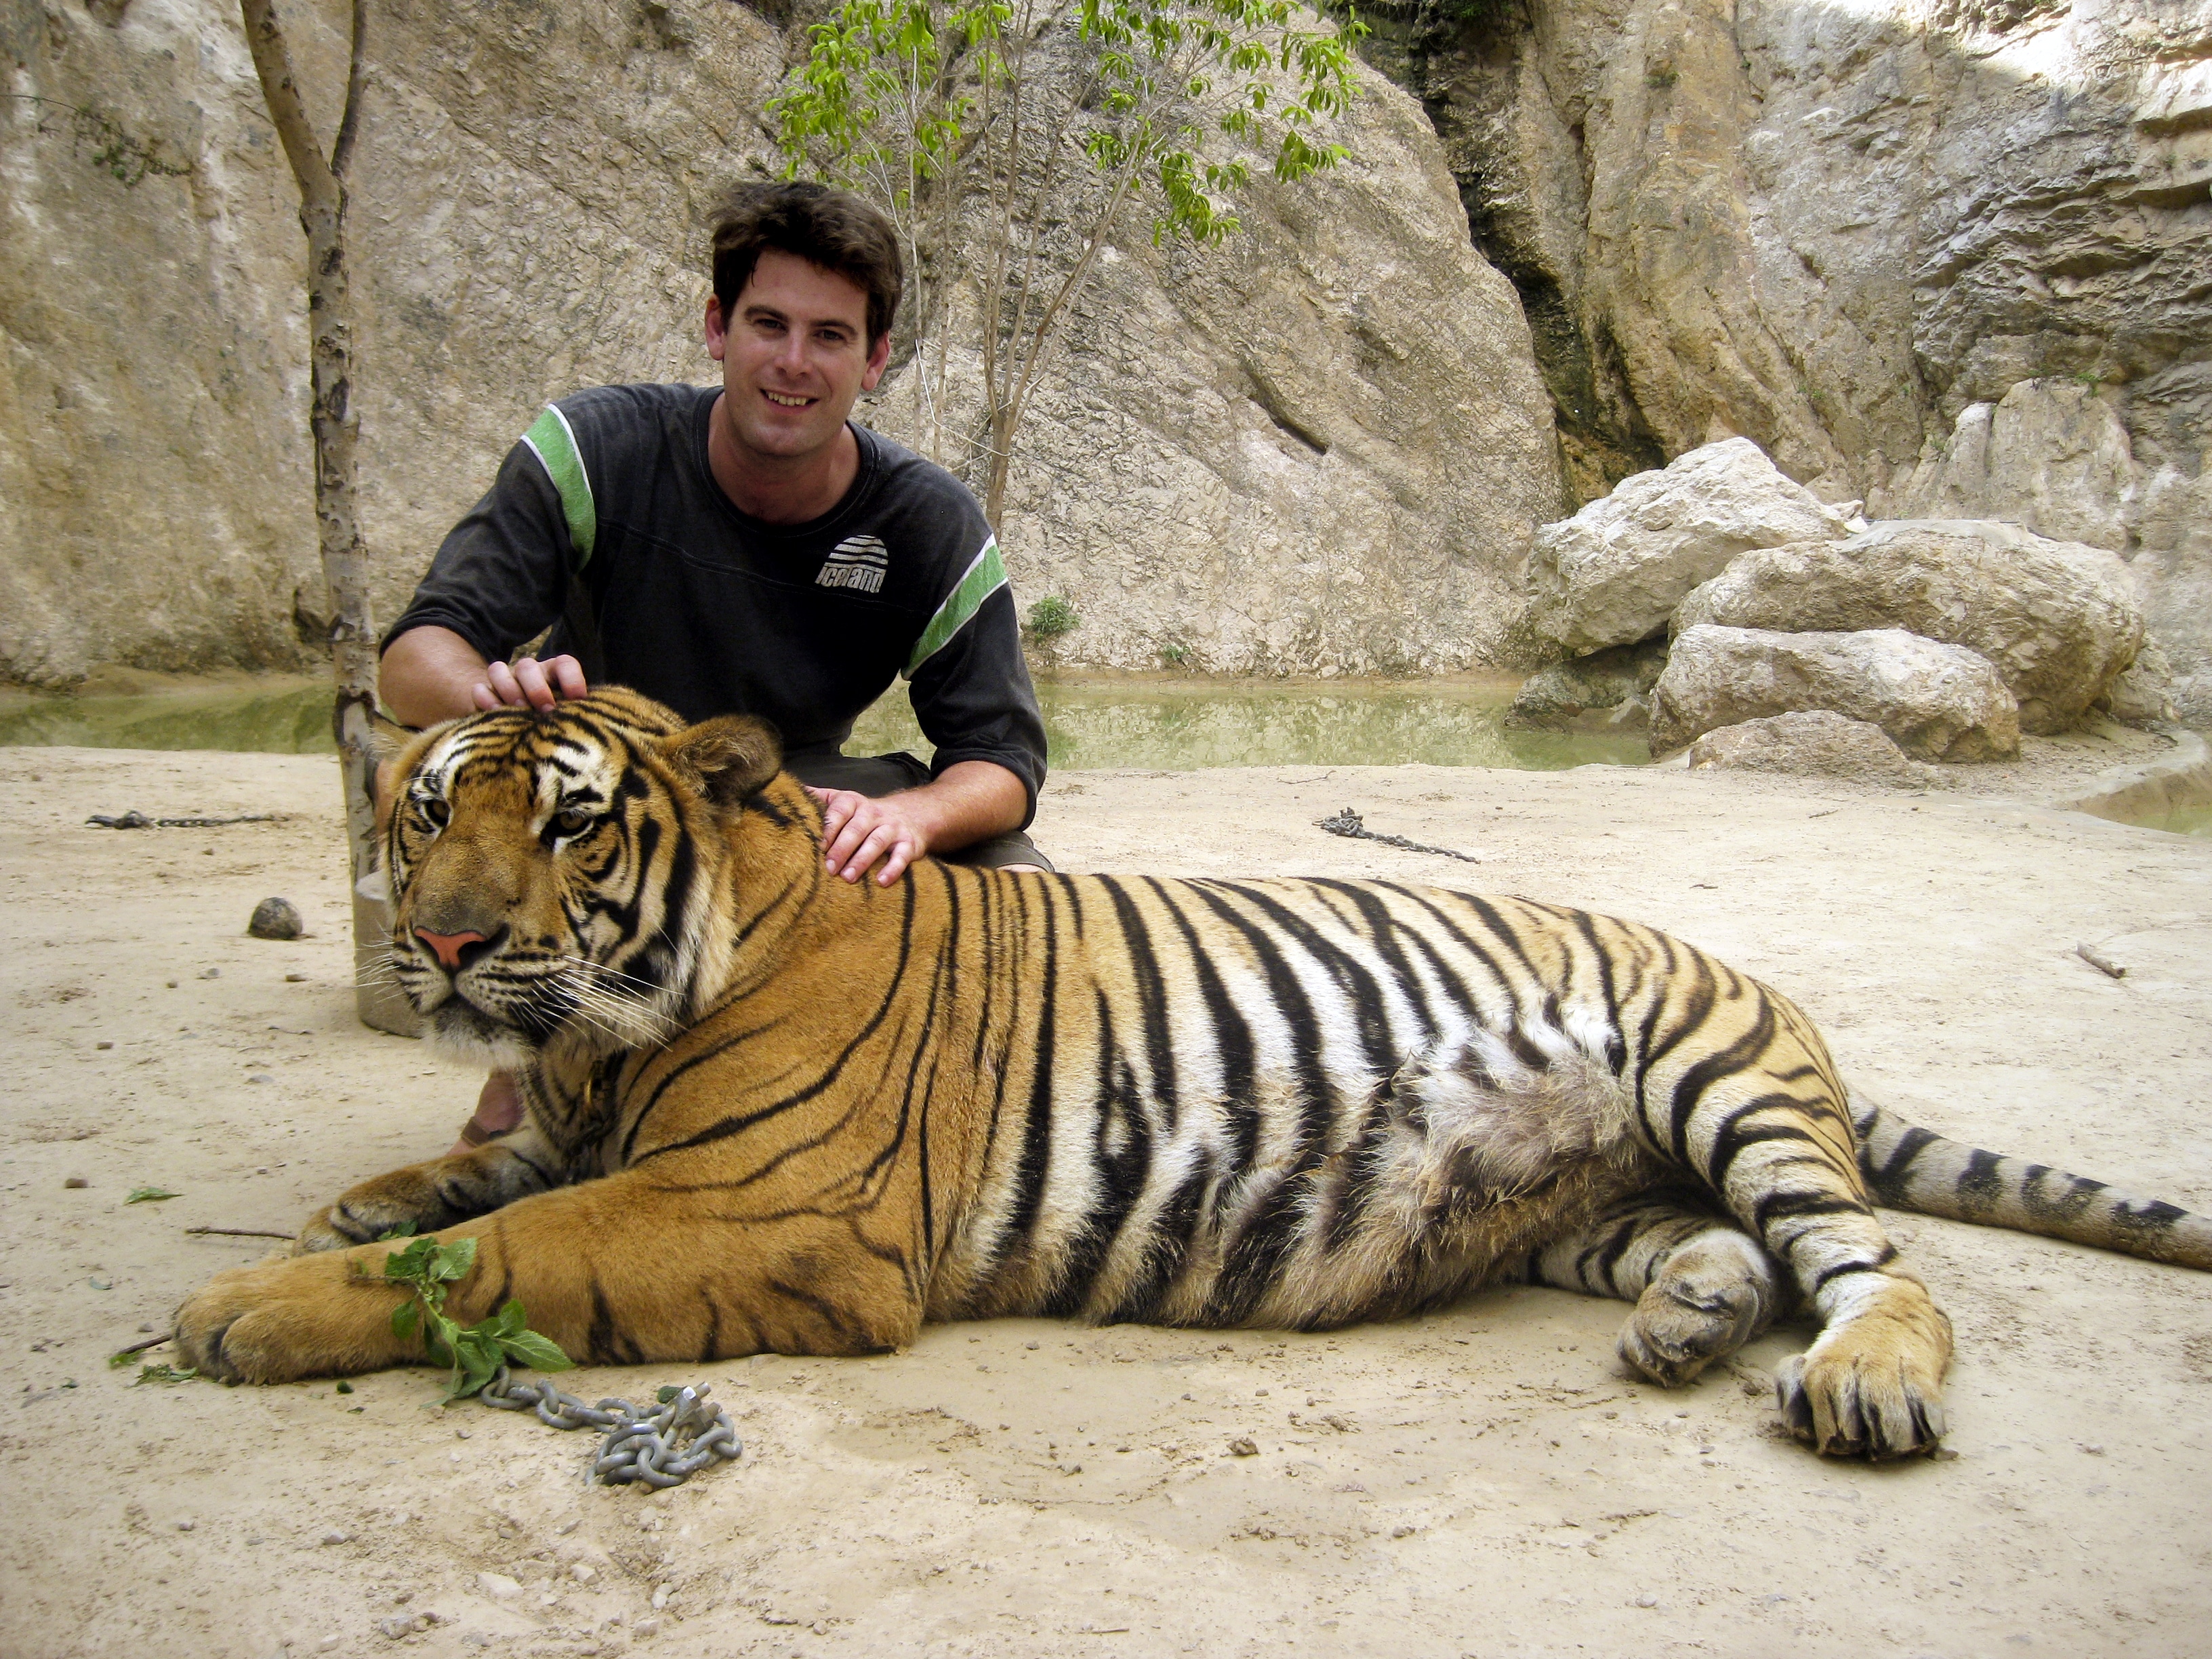 Tiger Selfie - World's Cruelest Tourist Attractions